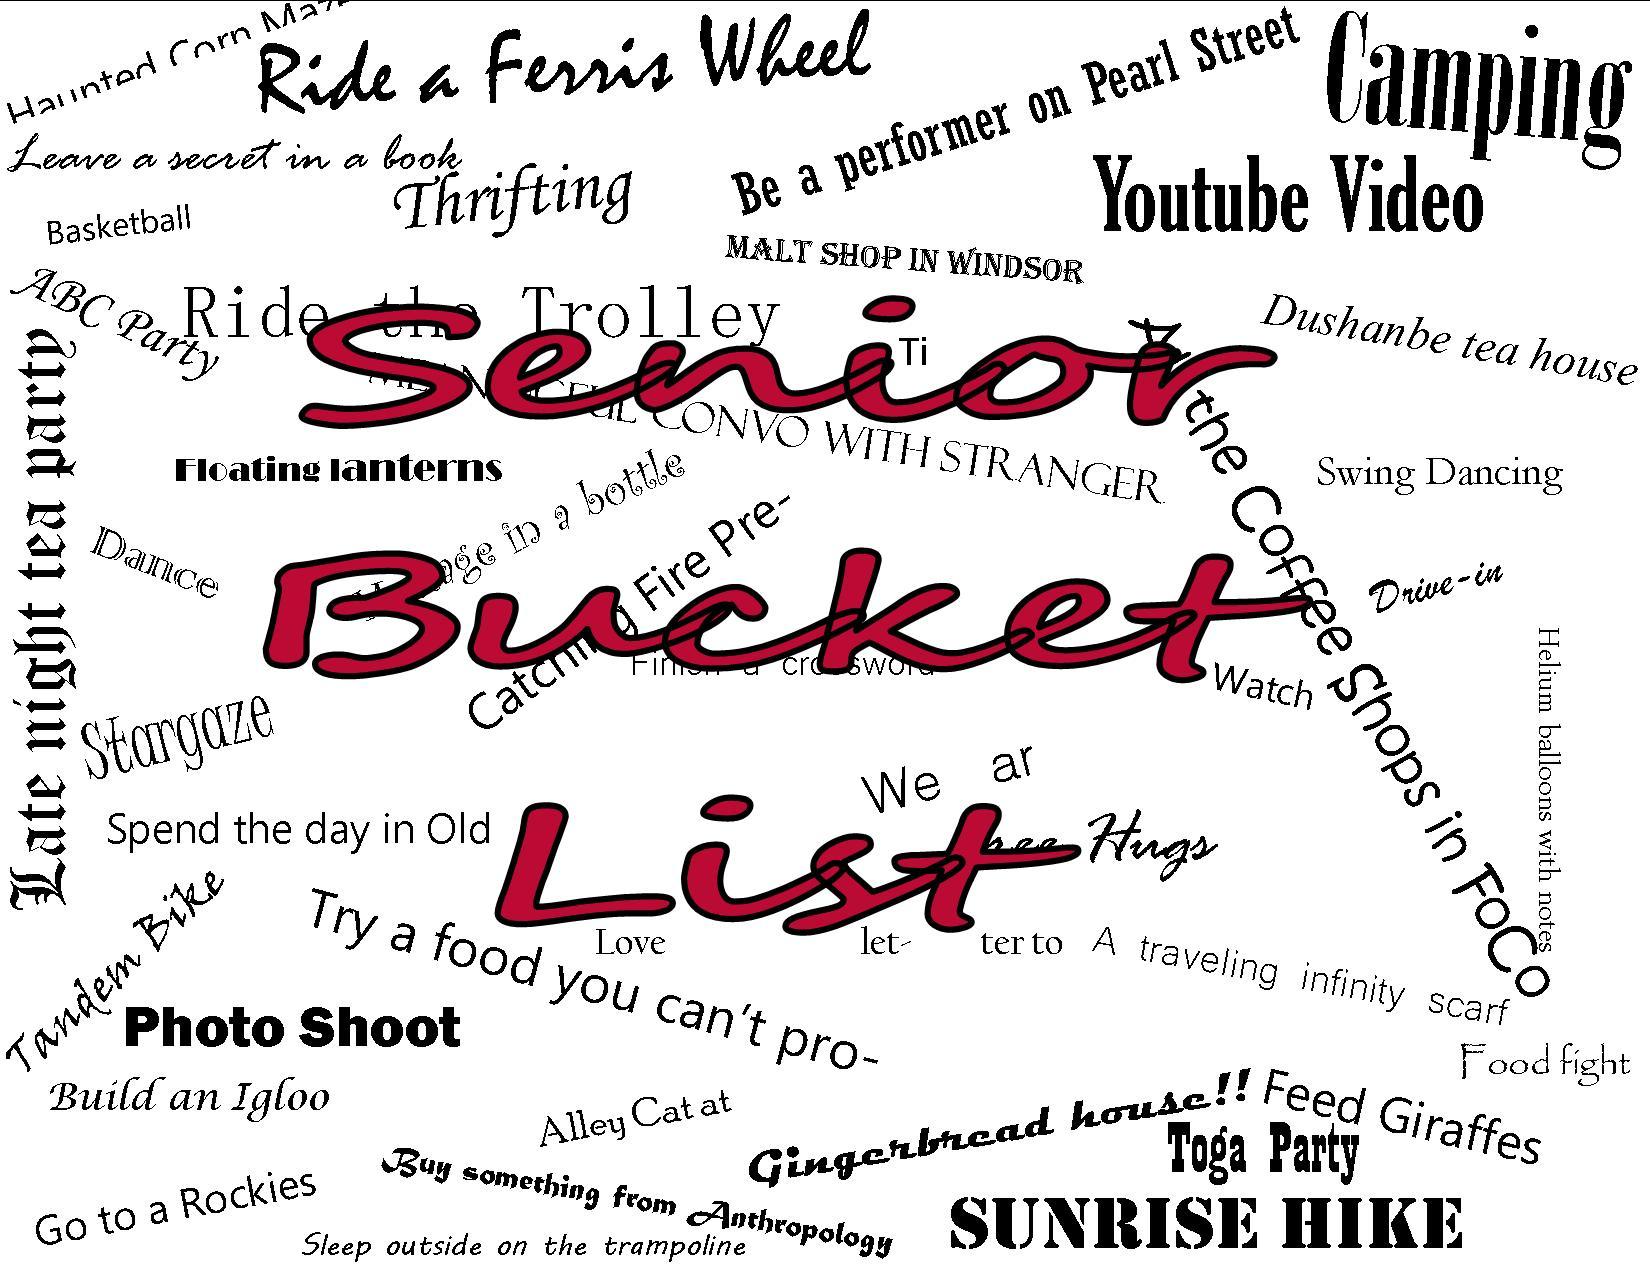 Senior bucket list: every opportunity